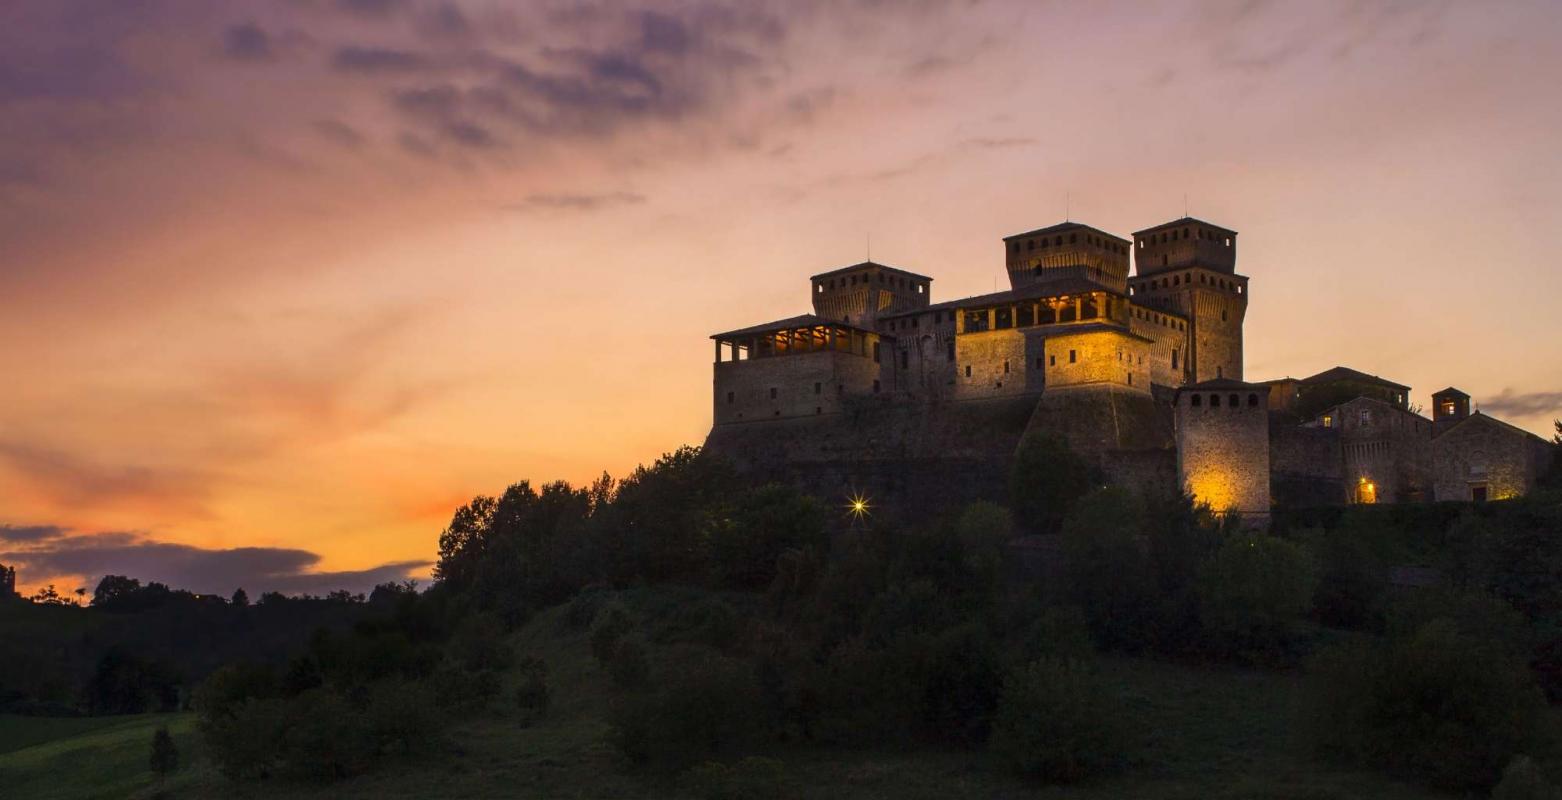 Castello di Torrechiara - Langhirano photo by Nicola Bisi